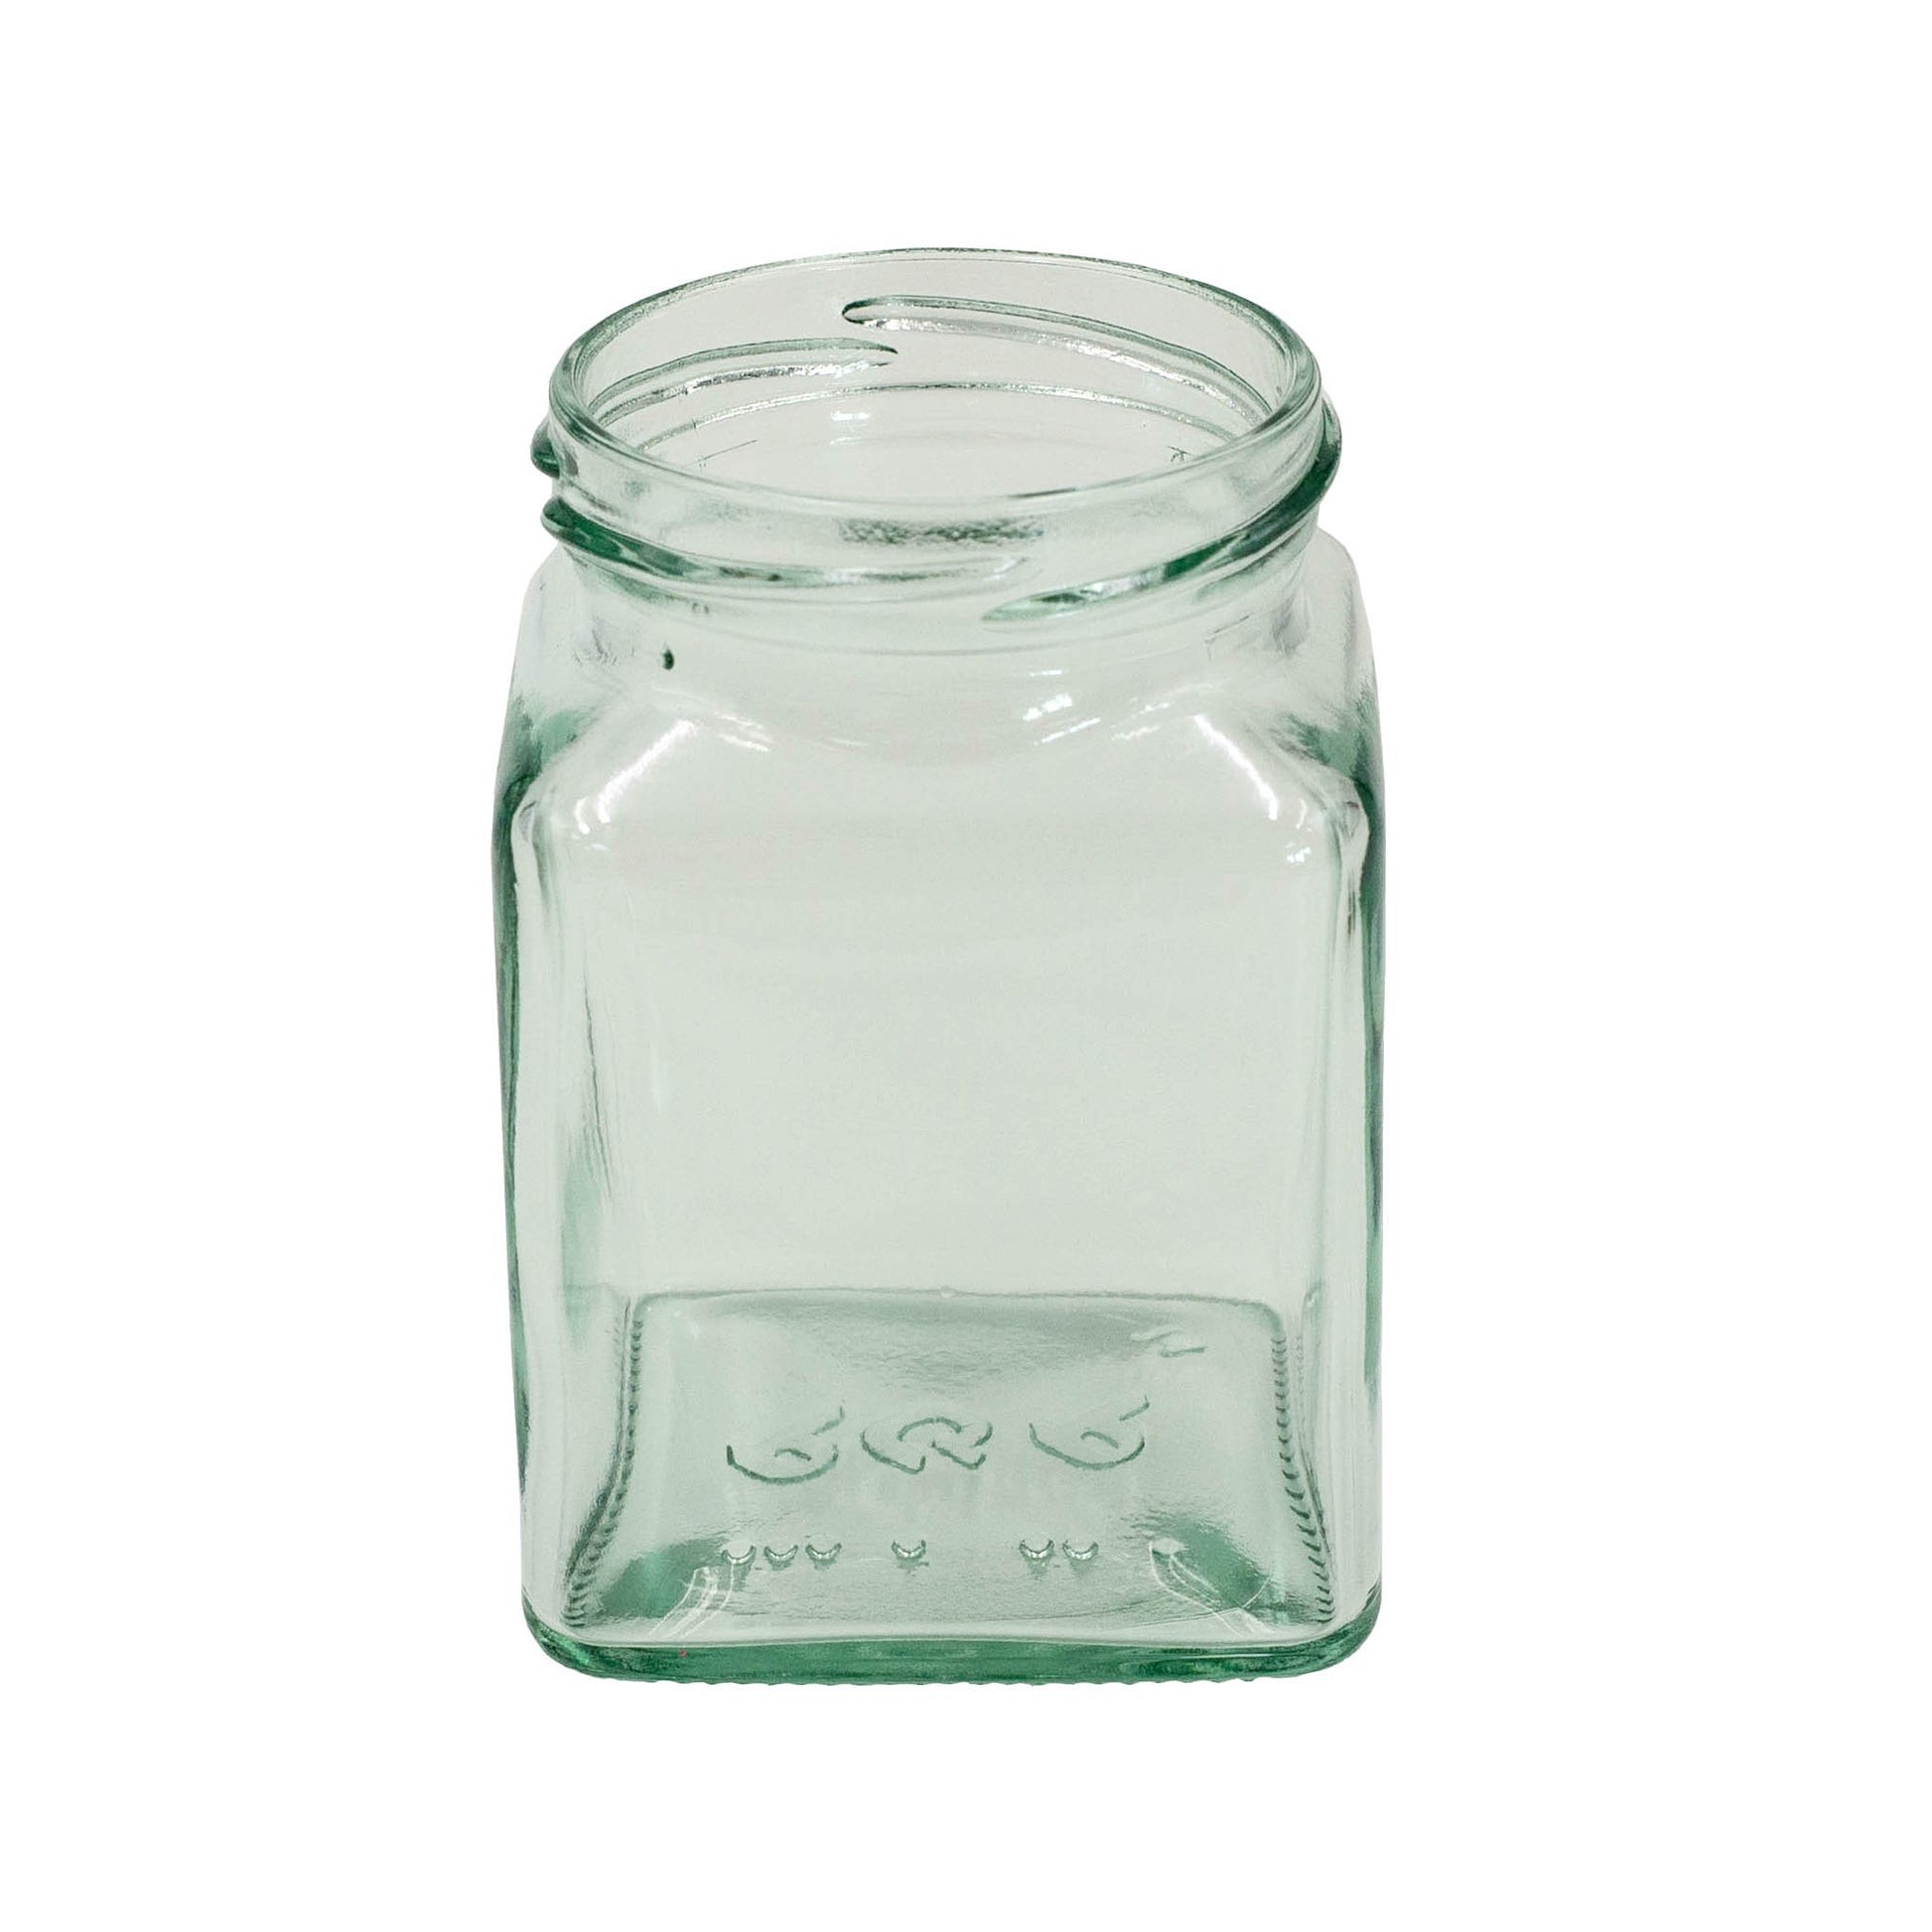 270ml square flint glass jar with 63mm screw cap opening. 